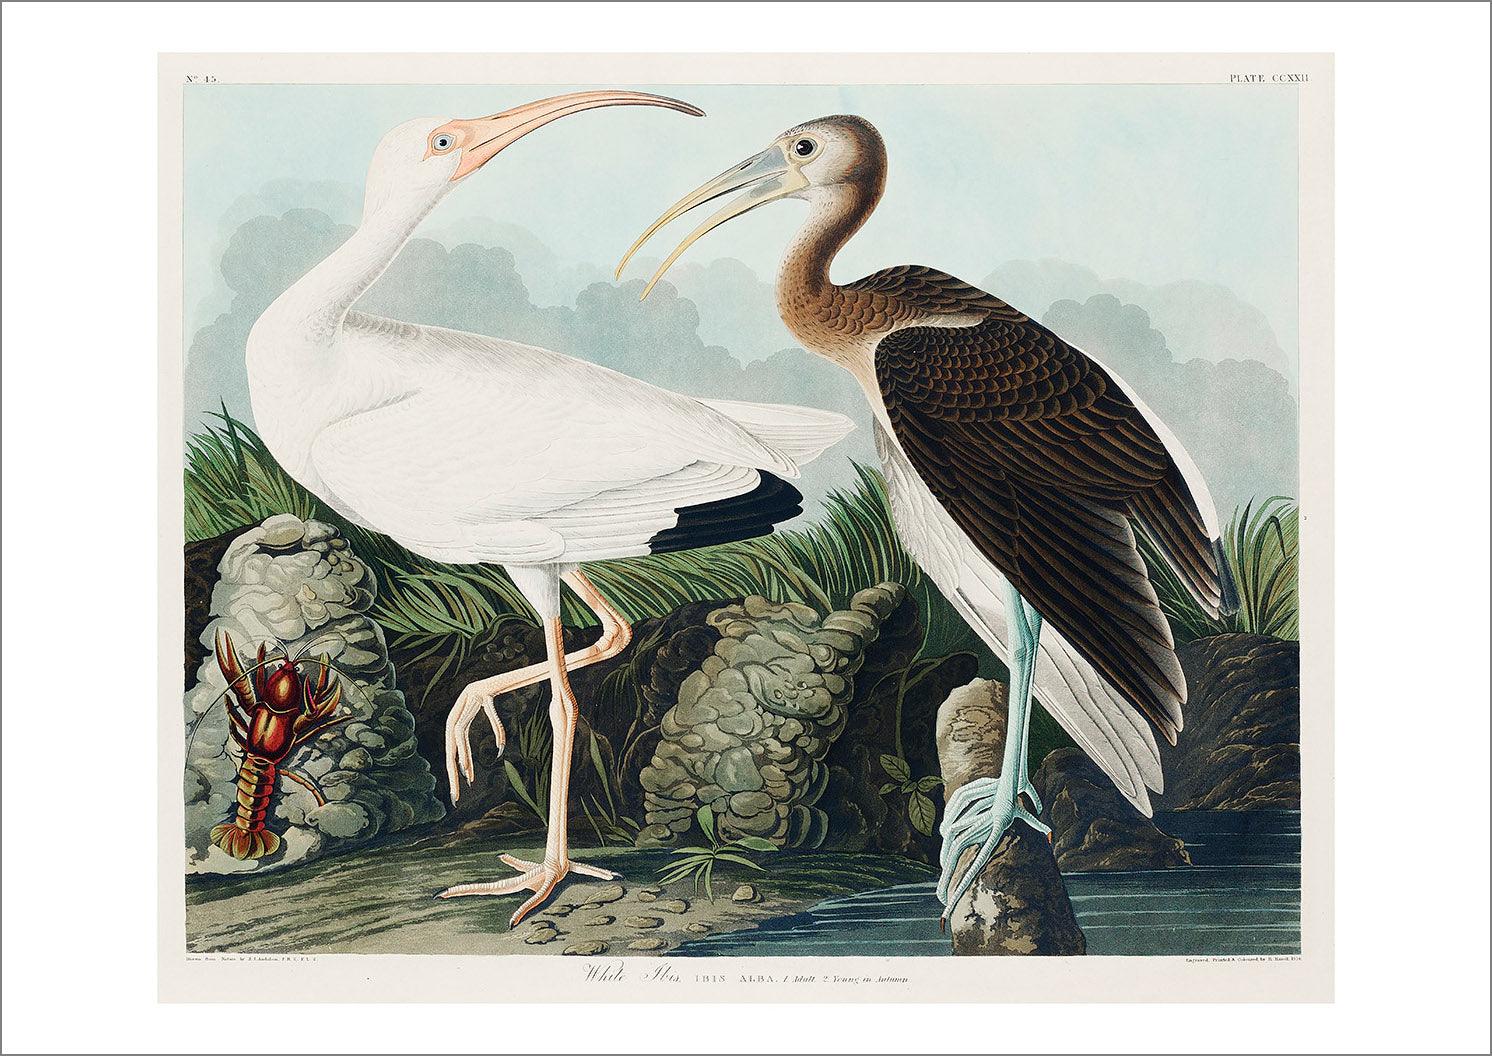 WHITE IBIS PRINT: Audubon Birds of America Art Illustration - Pimlico Prints